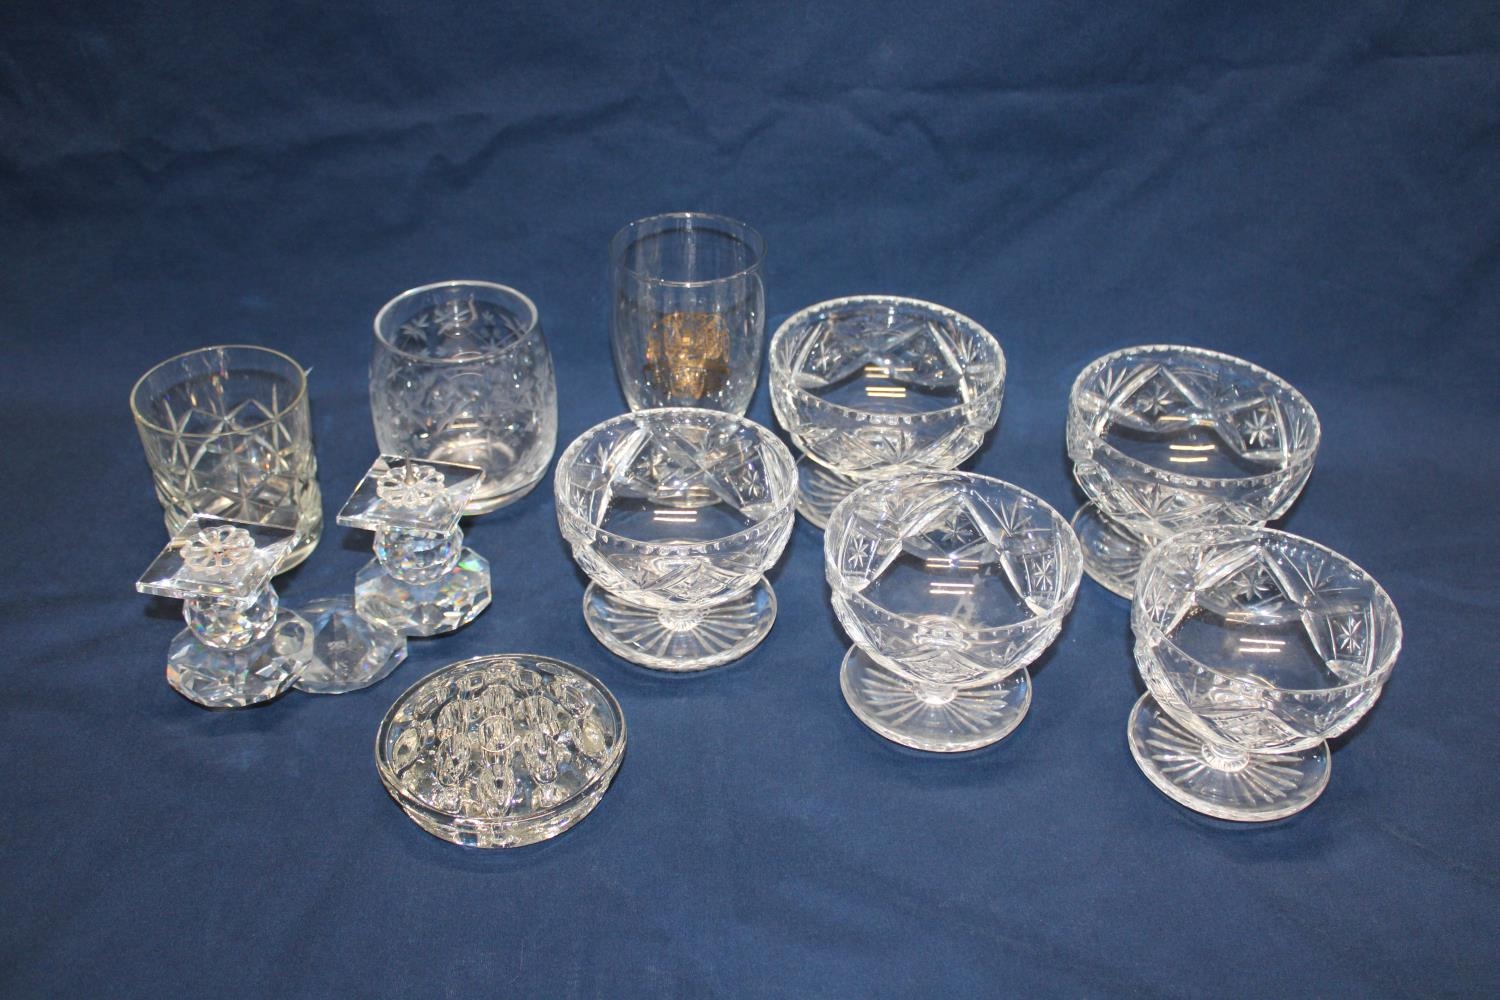 A shelf full of vintage glassware